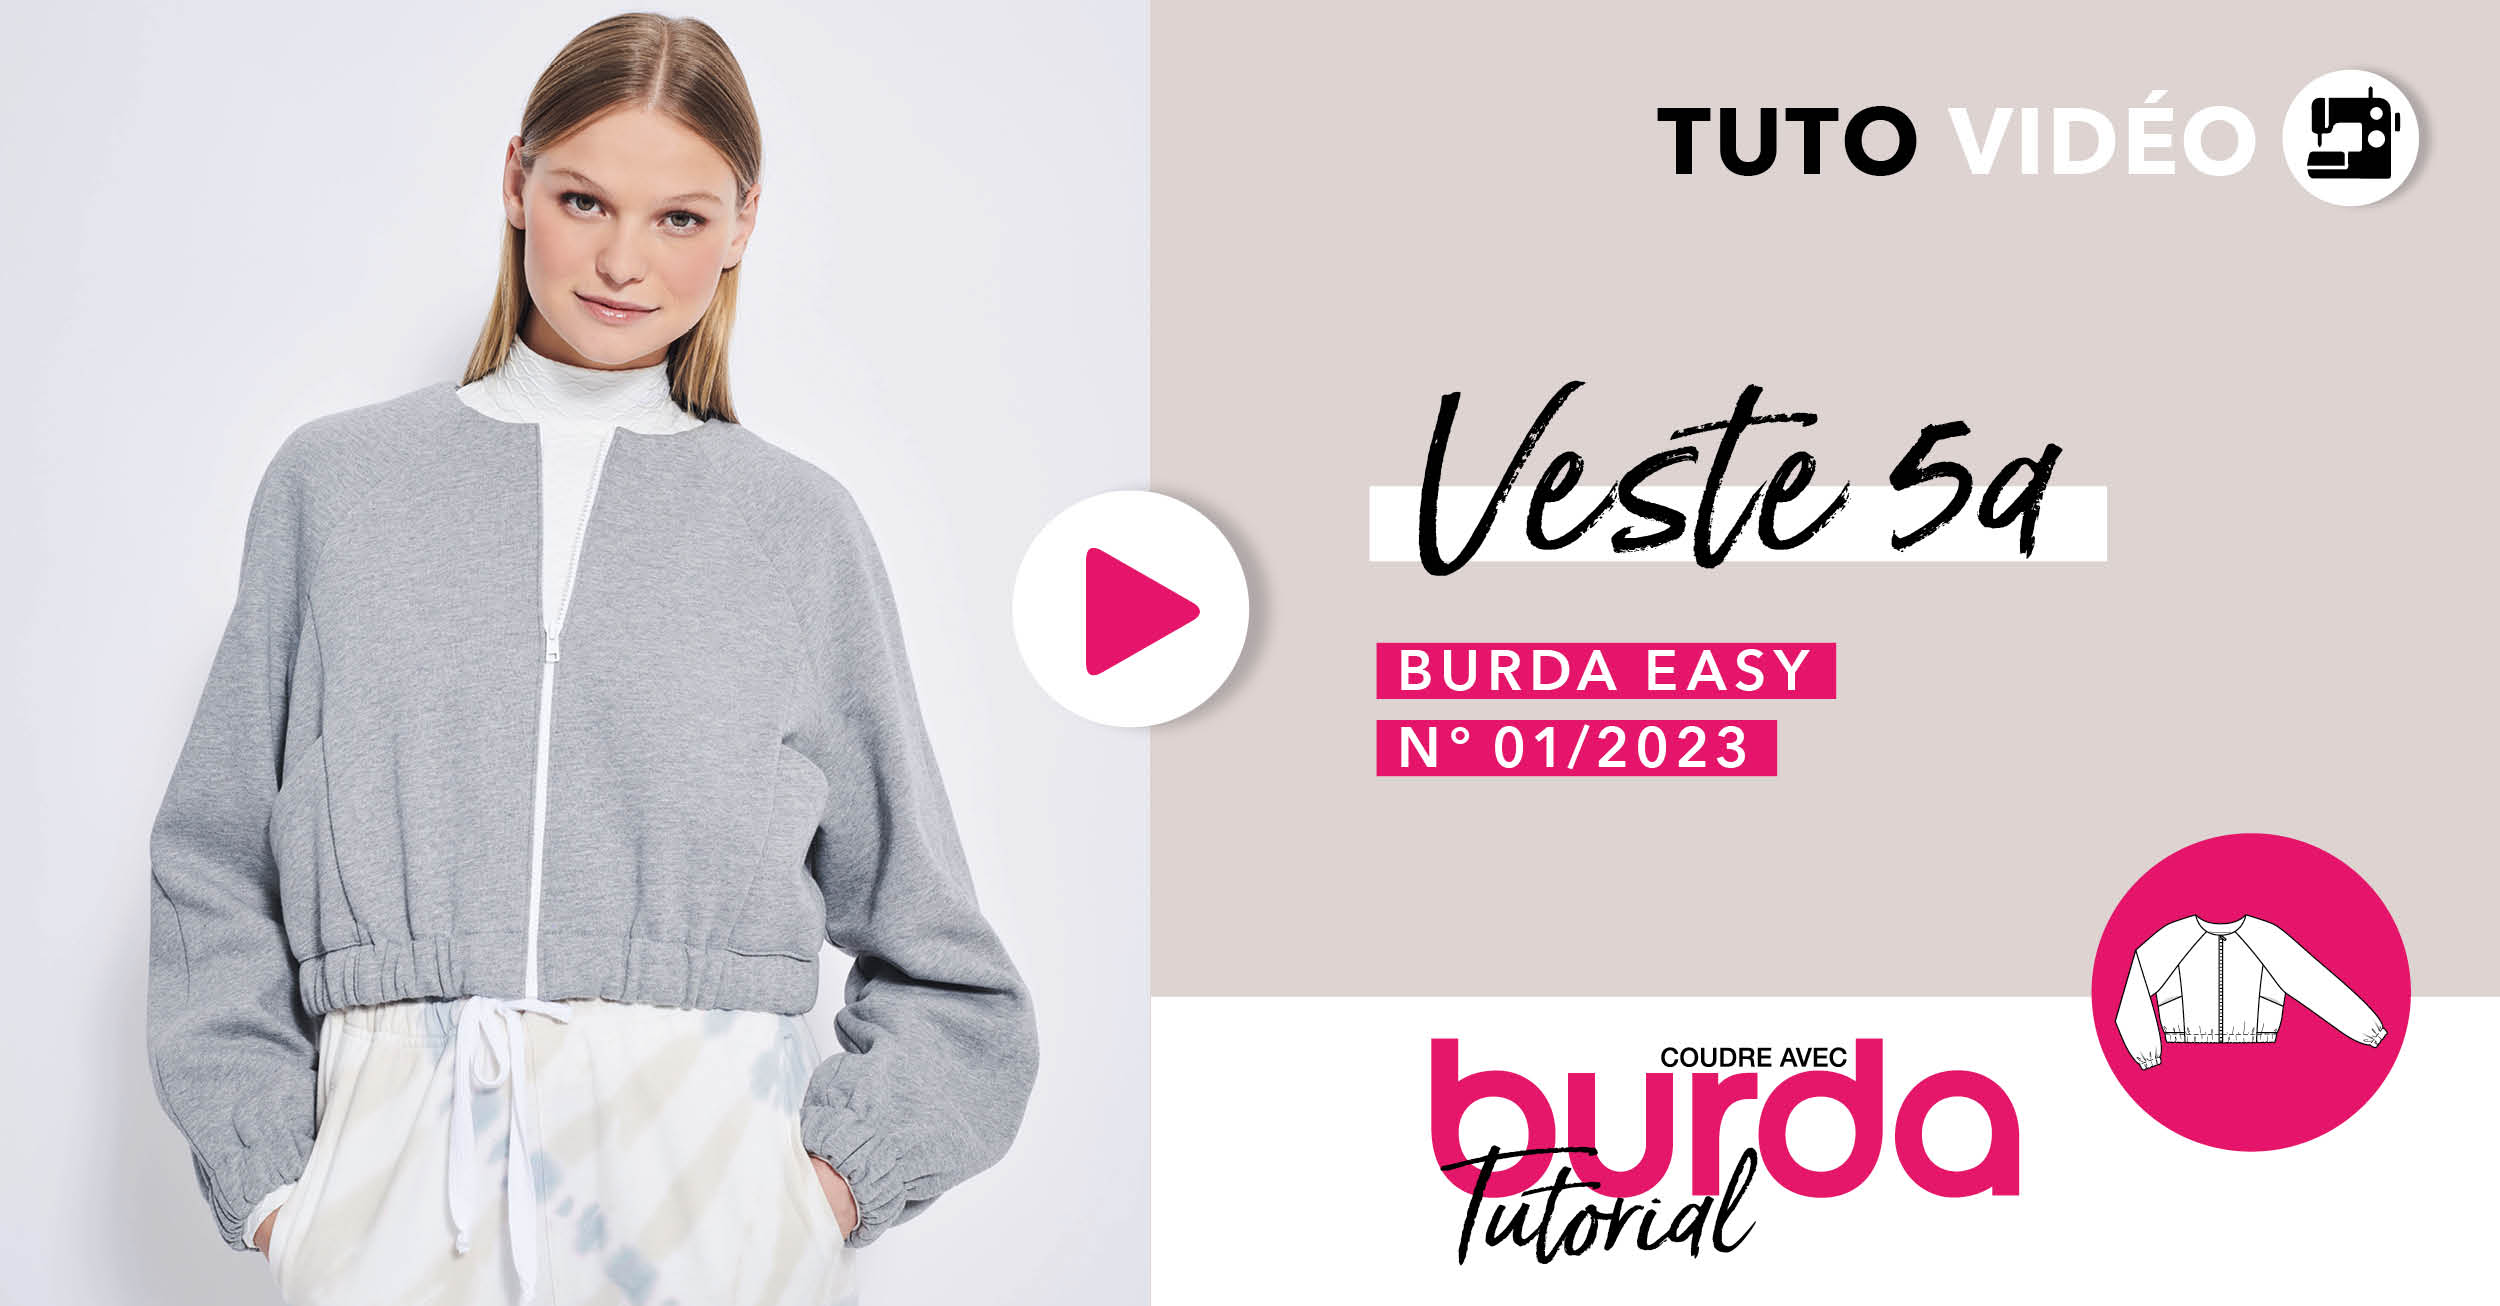 Tuto vidéo : Blouson 5A - burda easy n°1 janvier/février 2023